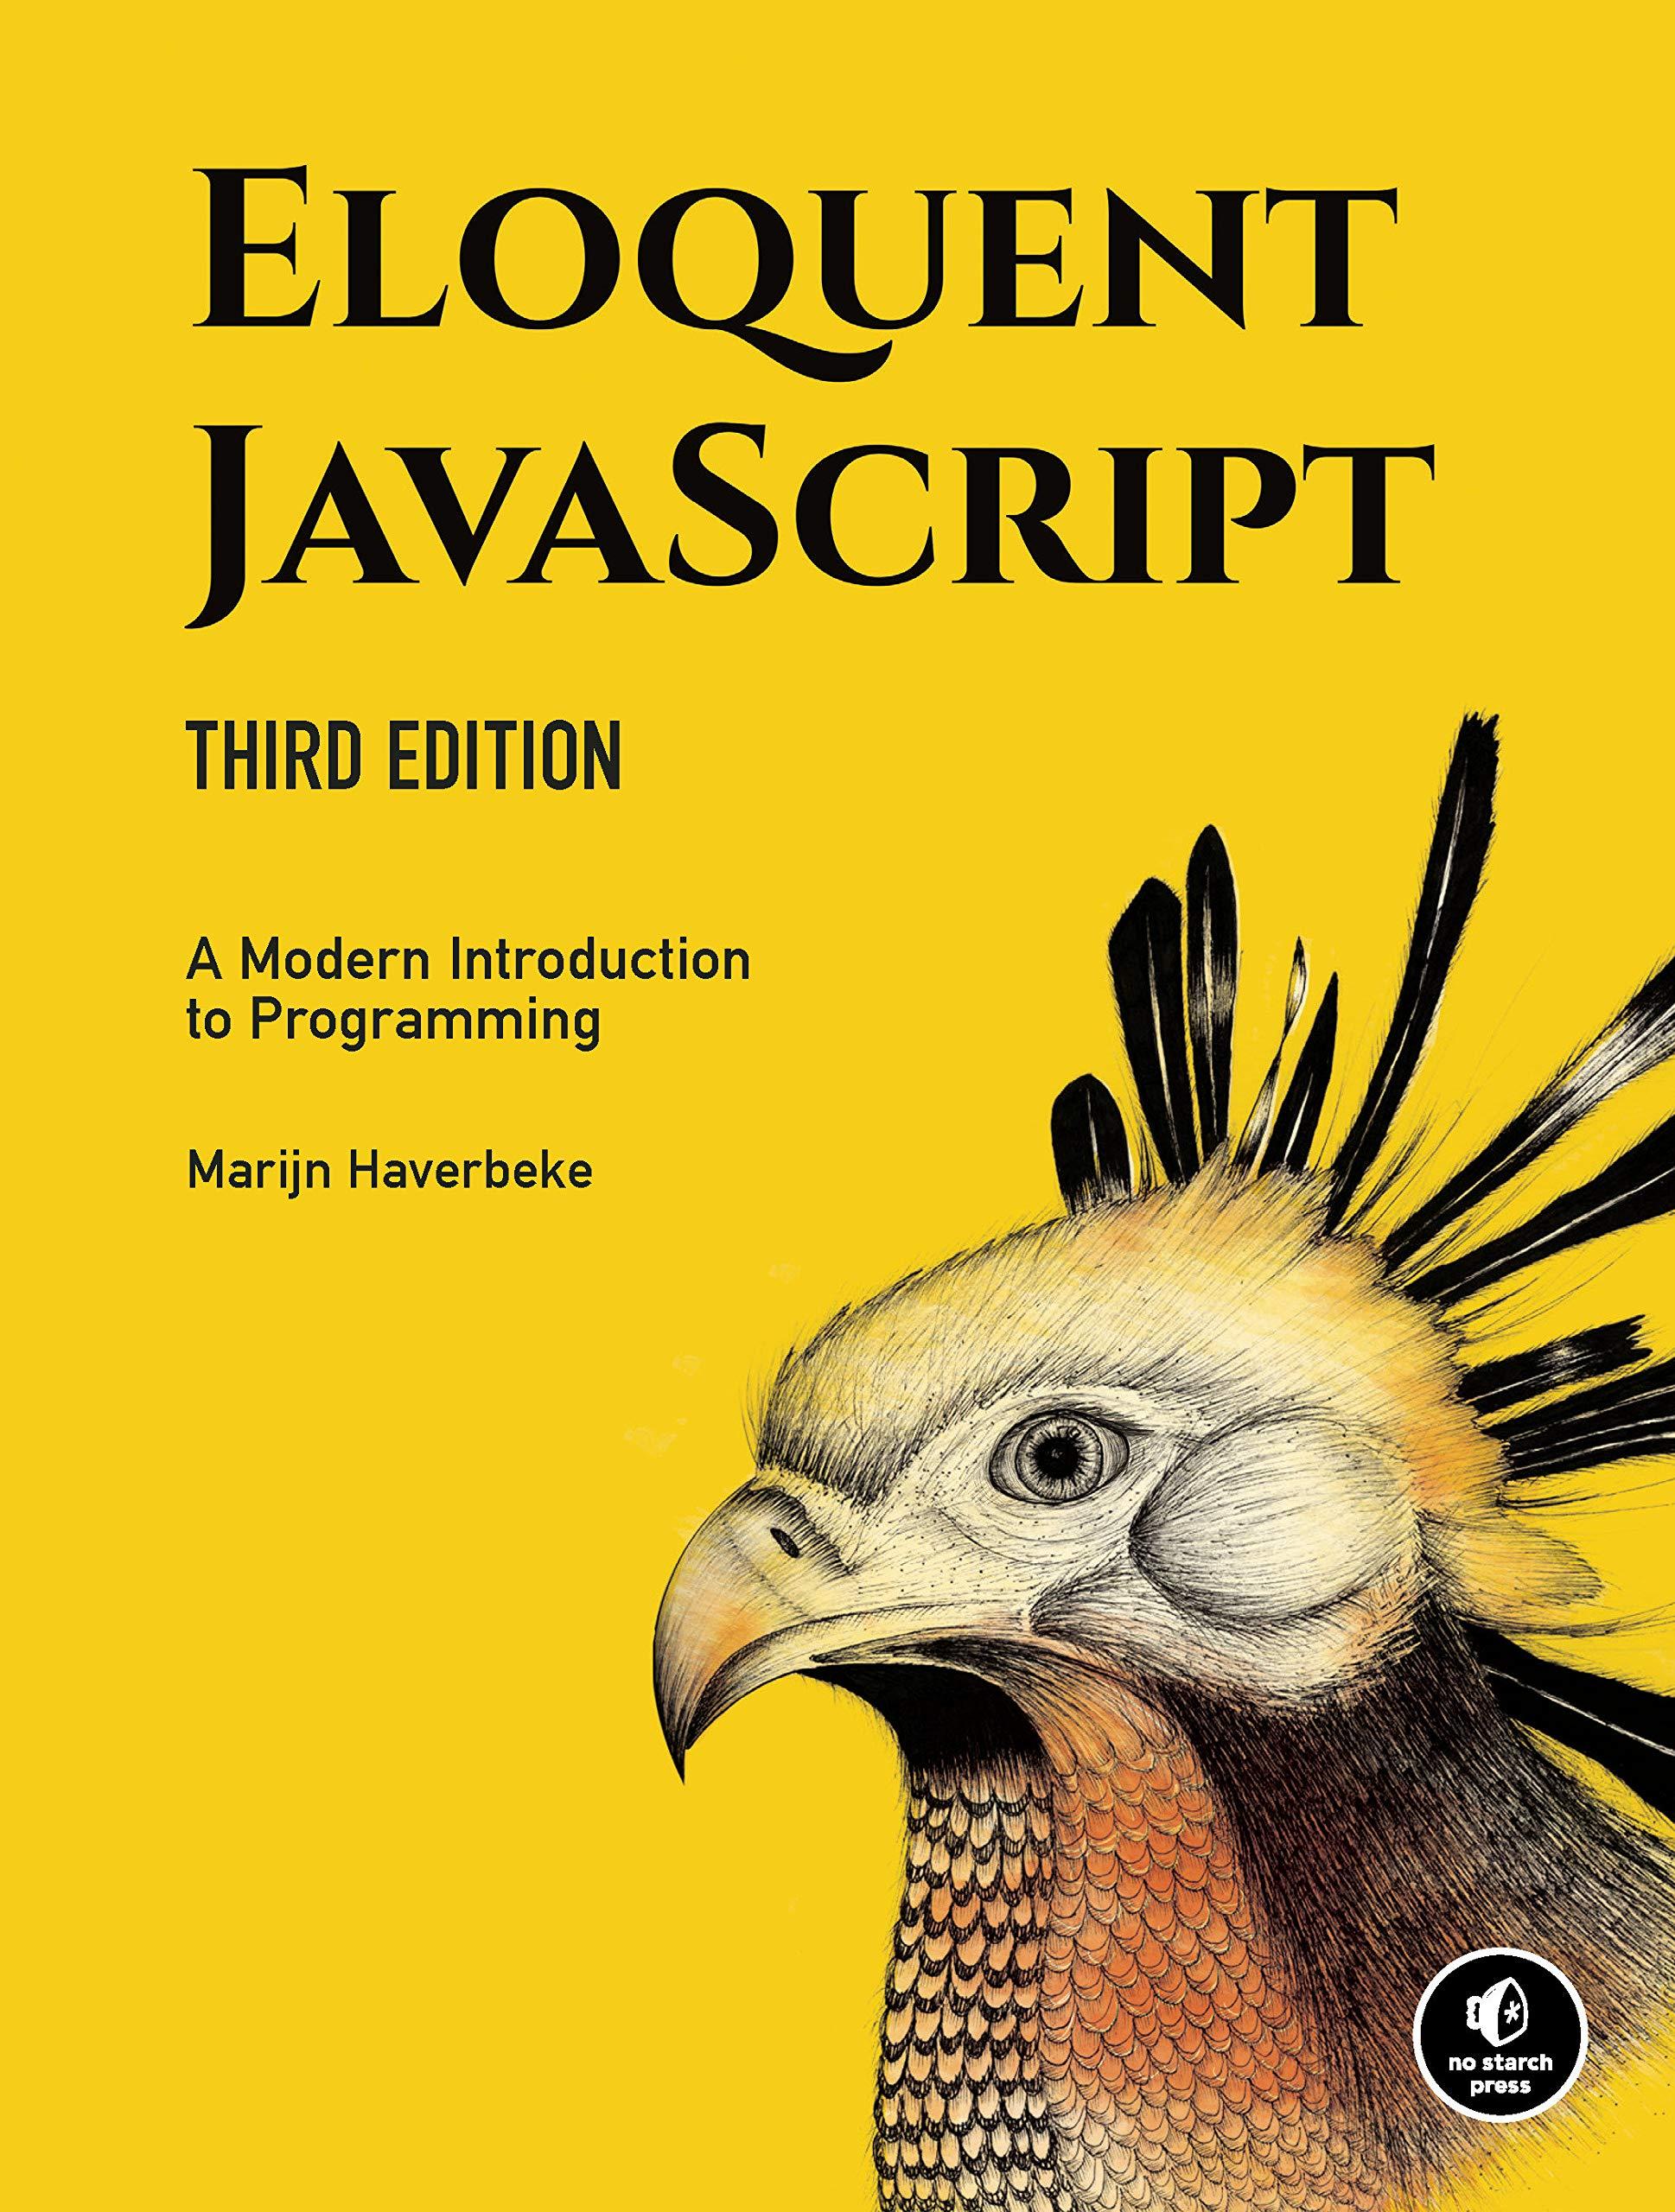 Eloquent Javascript's face